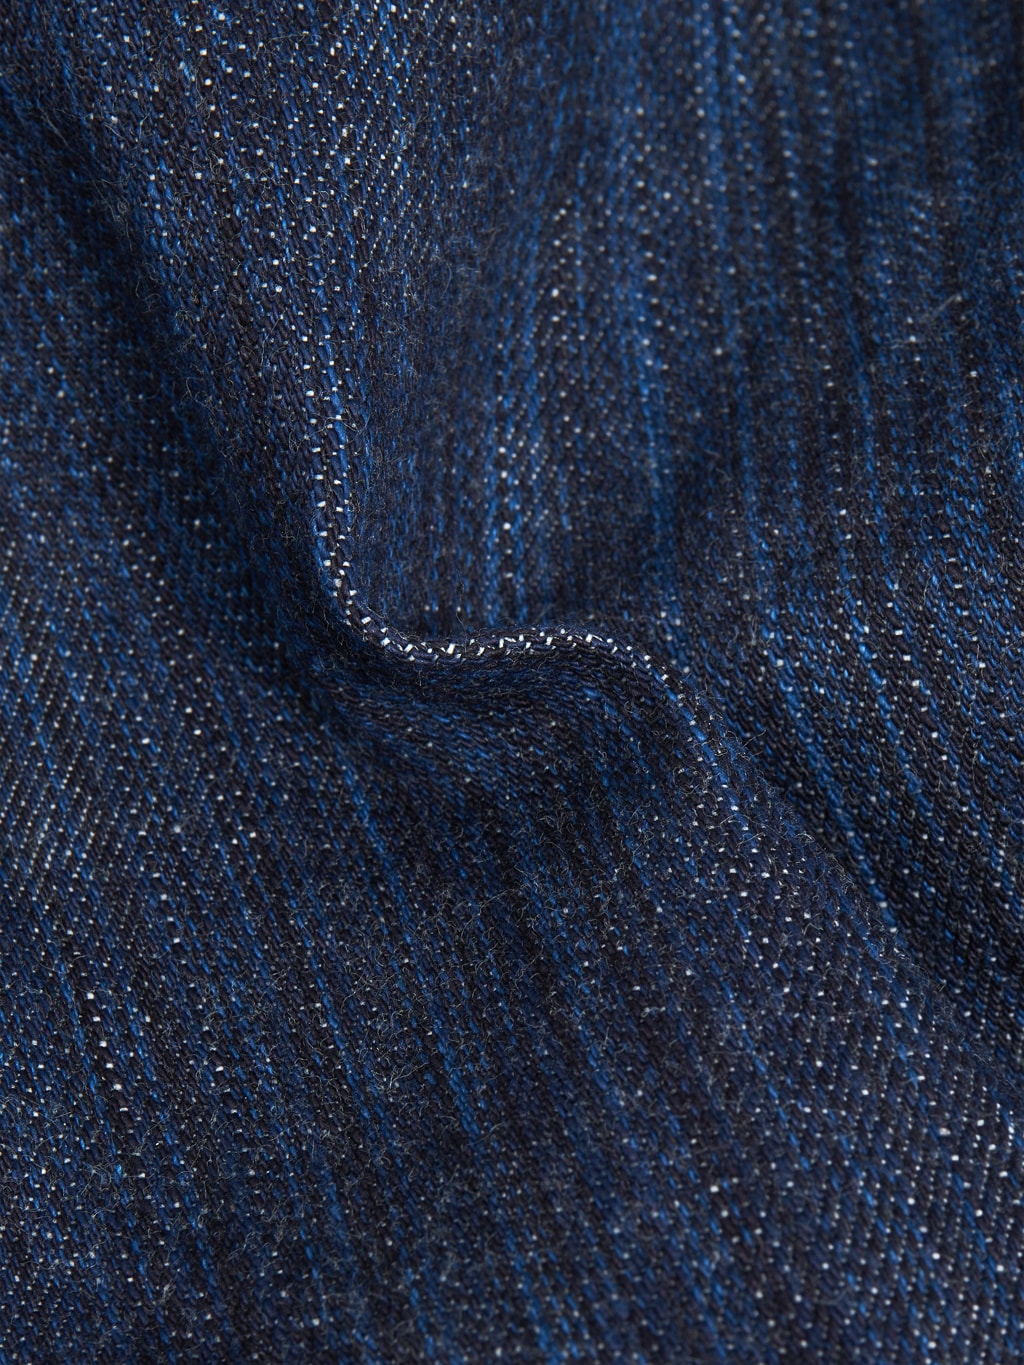 The Strike Gold 8104 Shower Slub jeans denim cotton